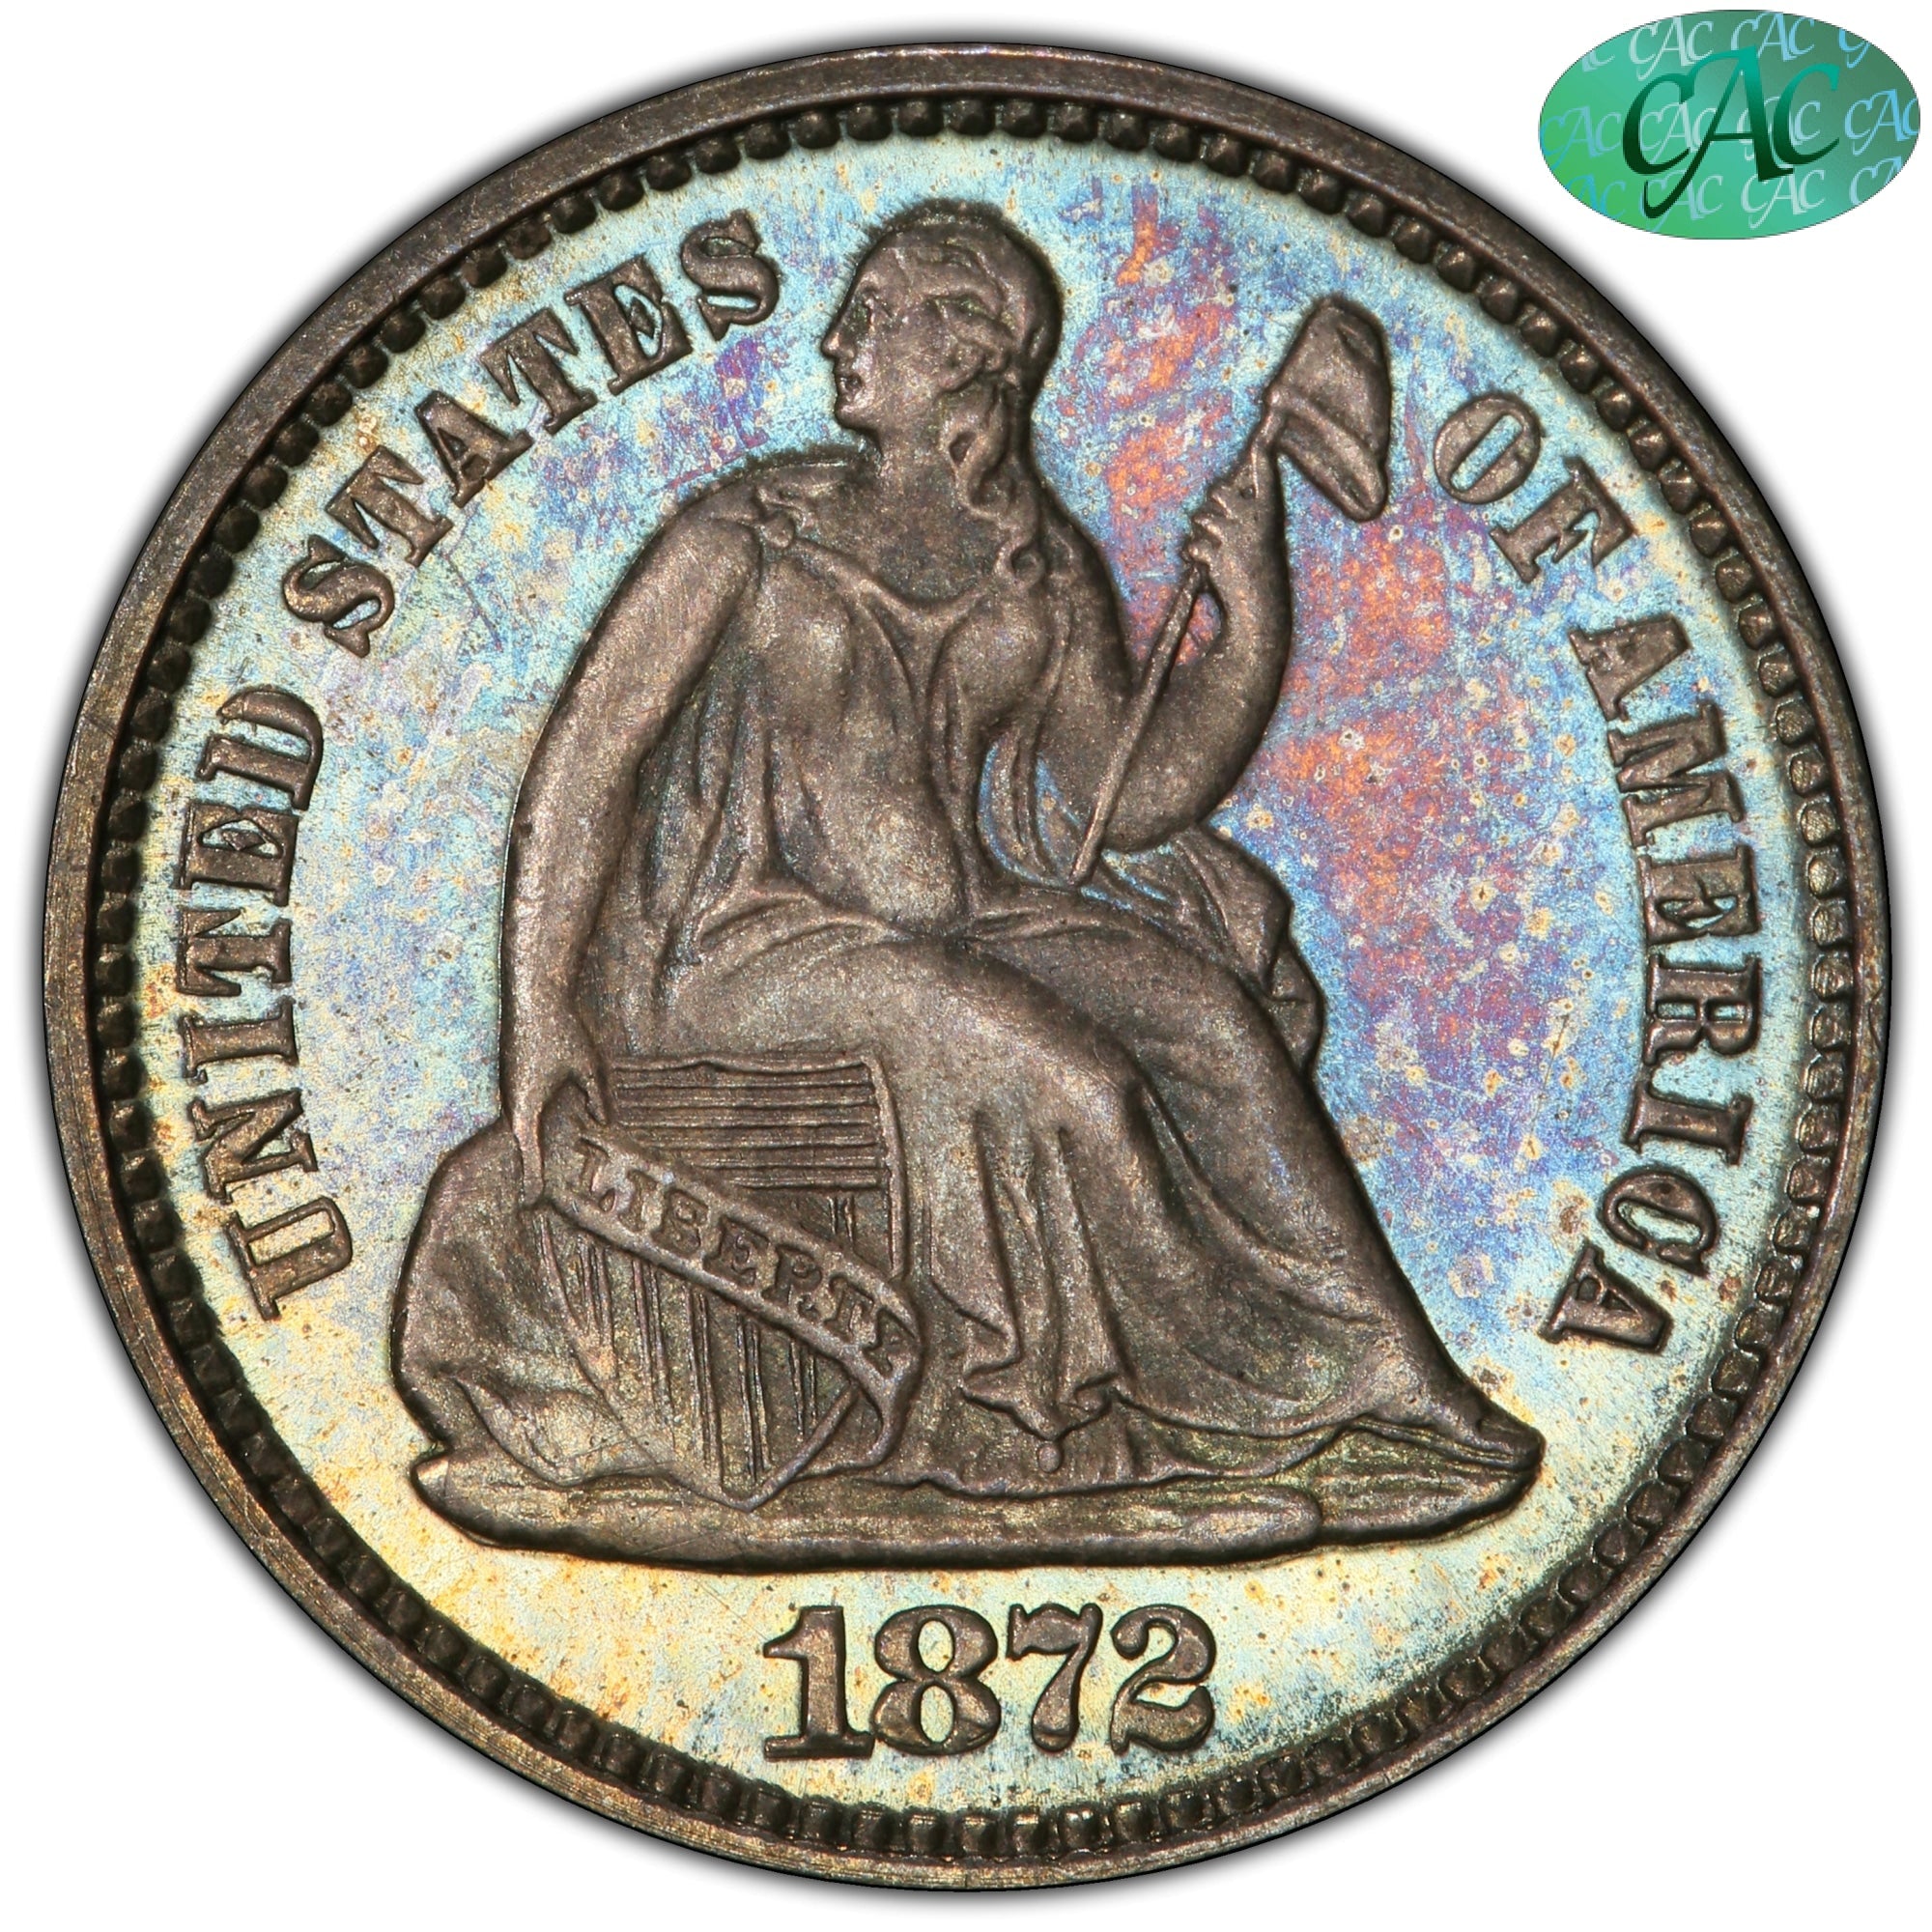 1872 H10C PR66 PCGS CAC - Paradime Coins | PCGS NGC CACG CAC Rare US Numismatic Coins For Sale